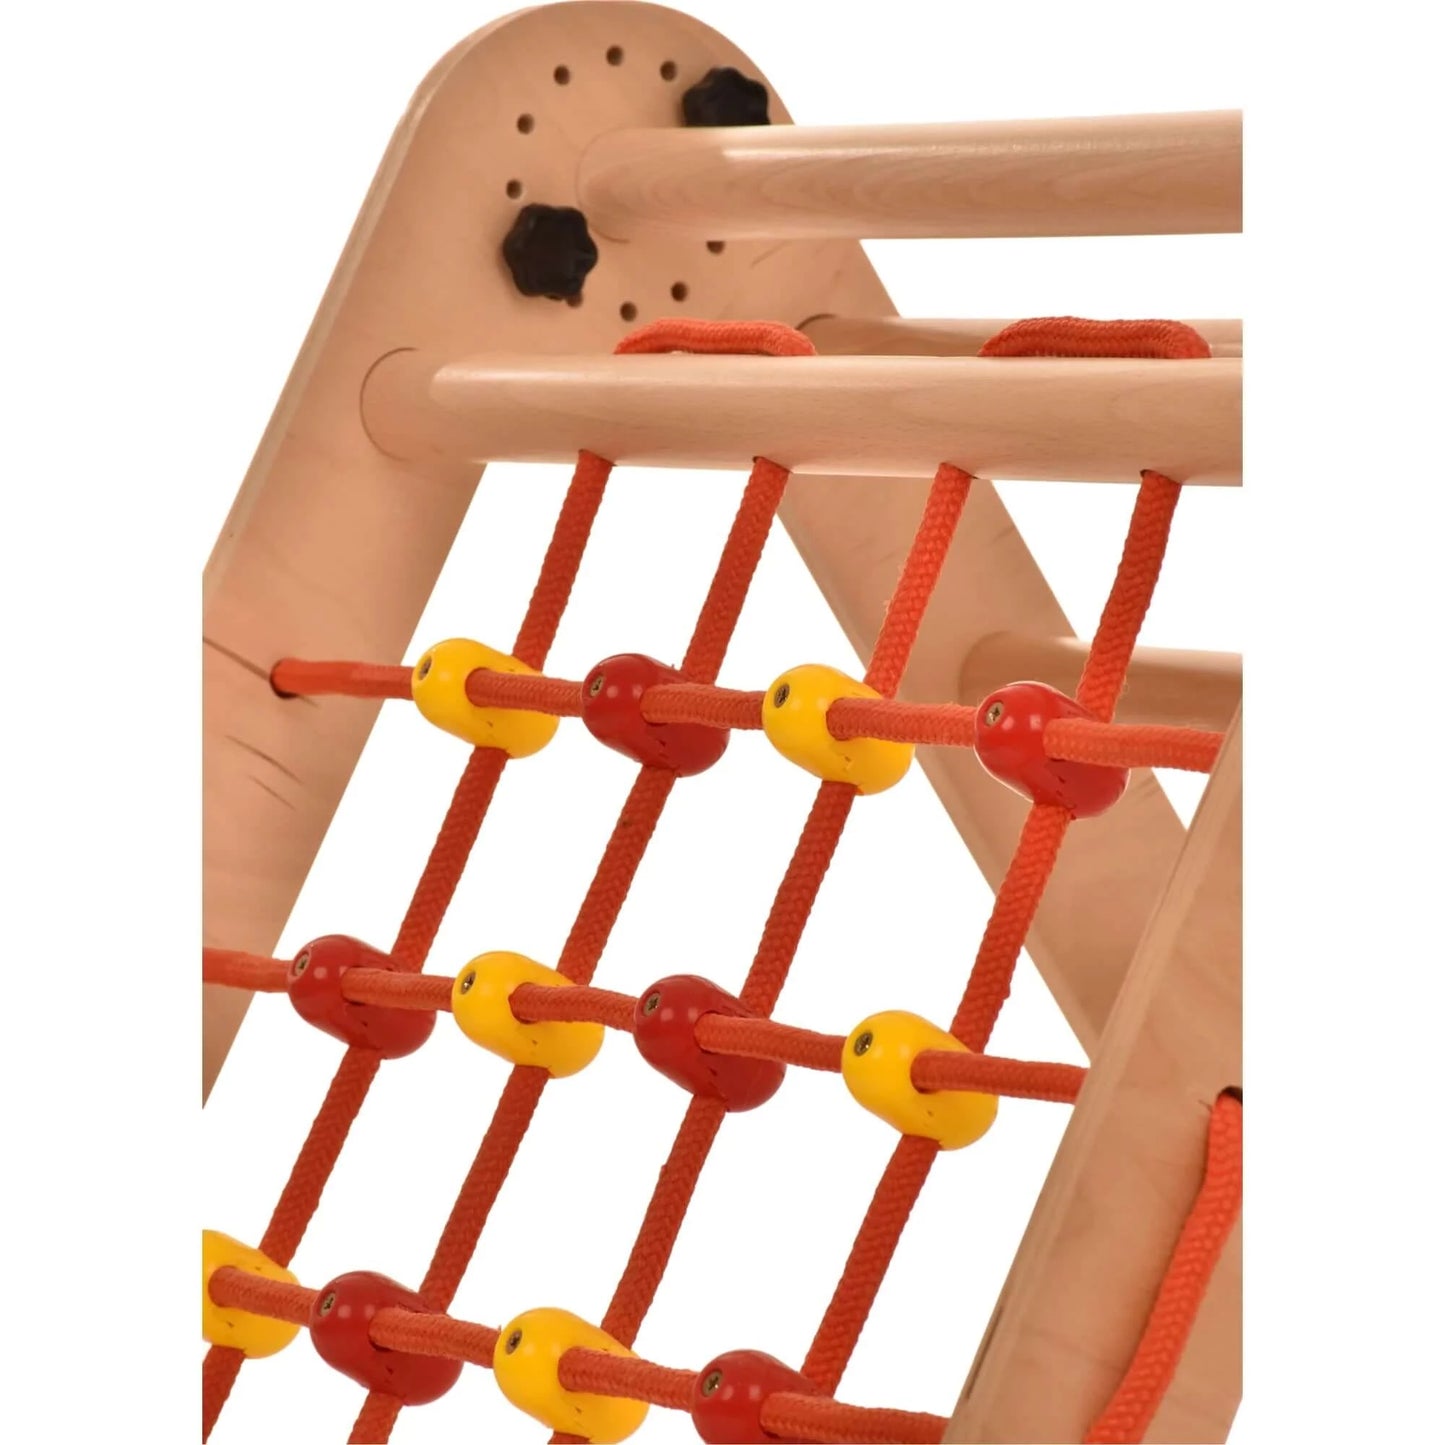 Climbing triangle BASIC with ladder, climbing net &amp; slide